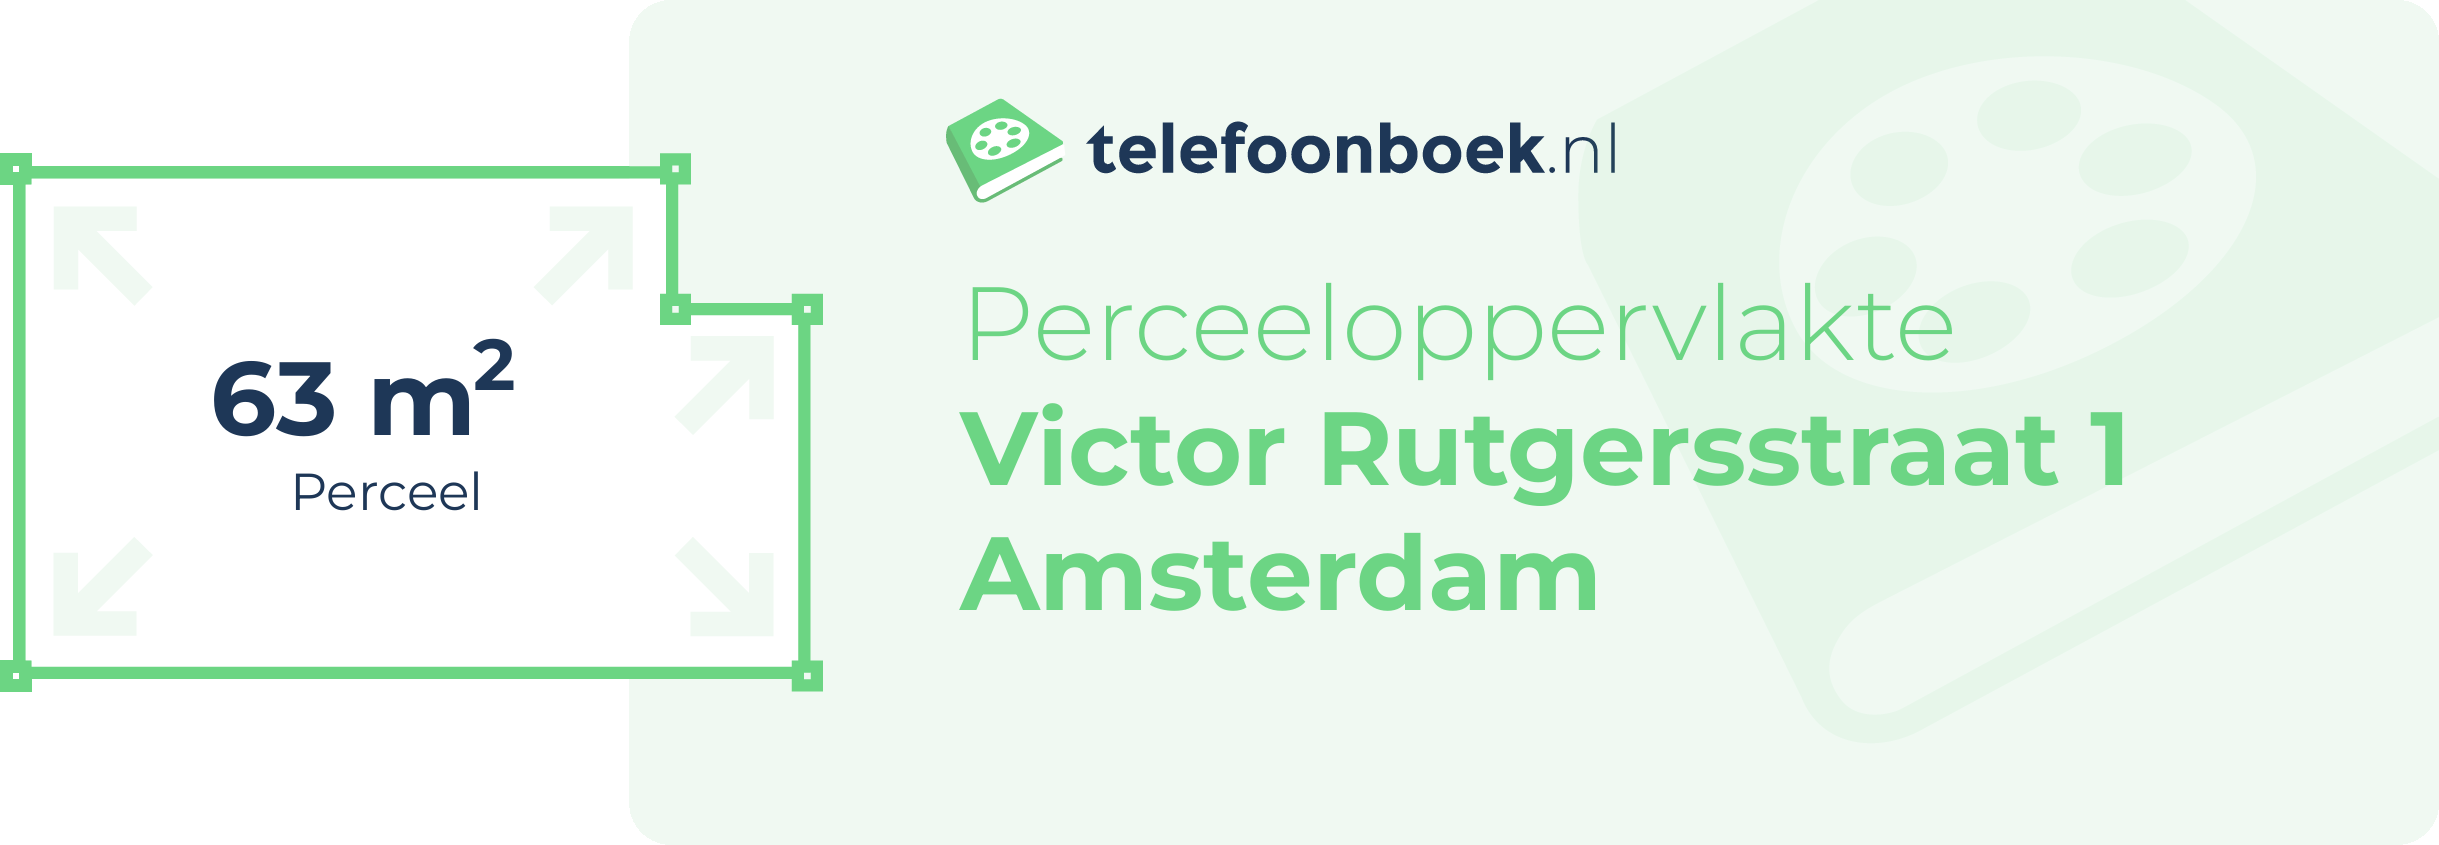 Perceeloppervlakte Victor Rutgersstraat 1 Amsterdam